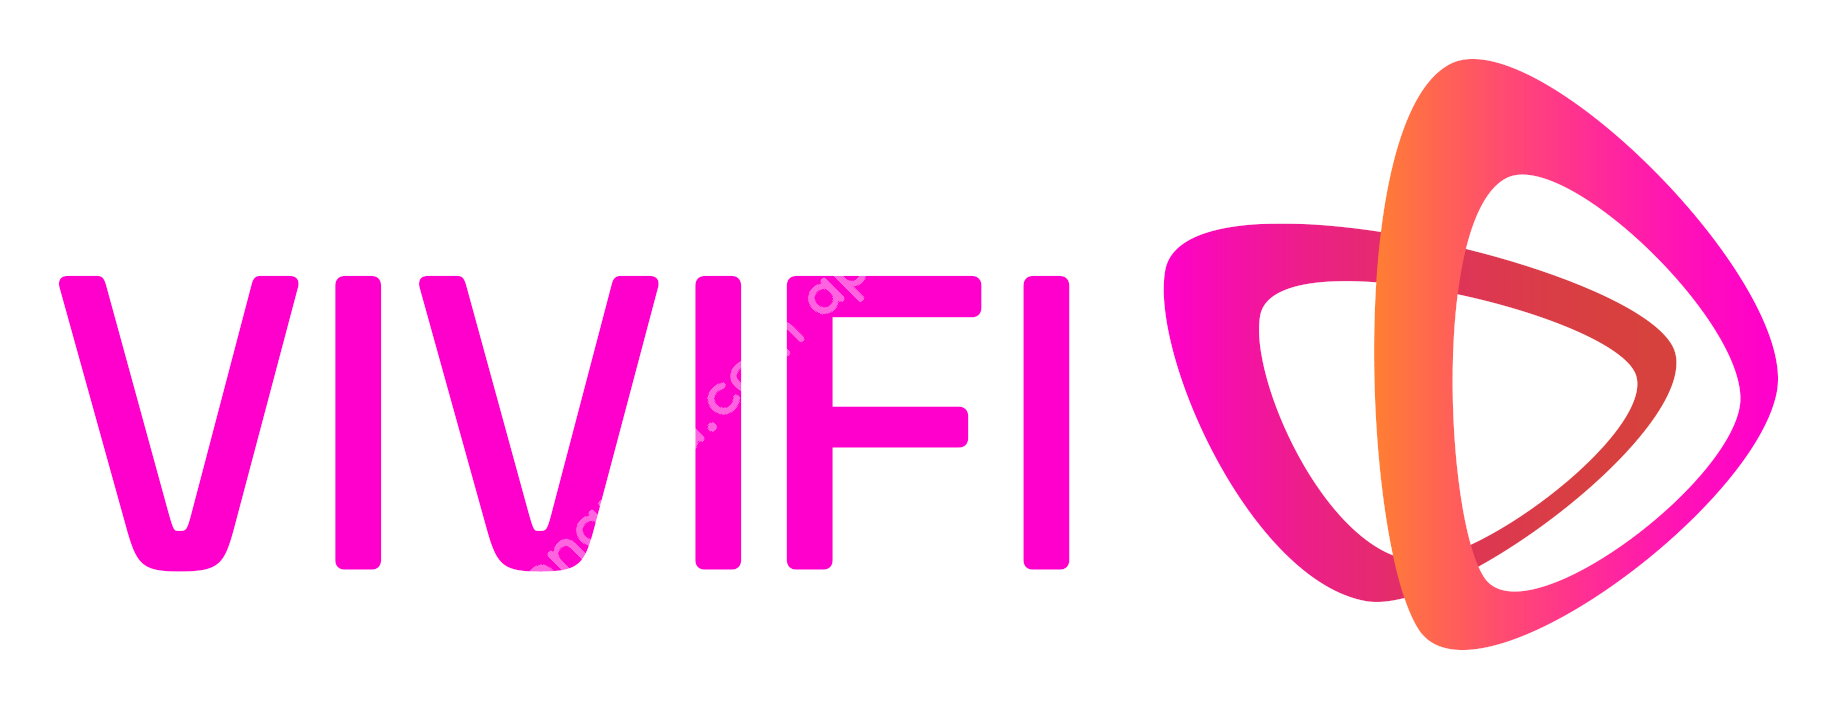 VIVIFI APN Internet Settings Android iPhone